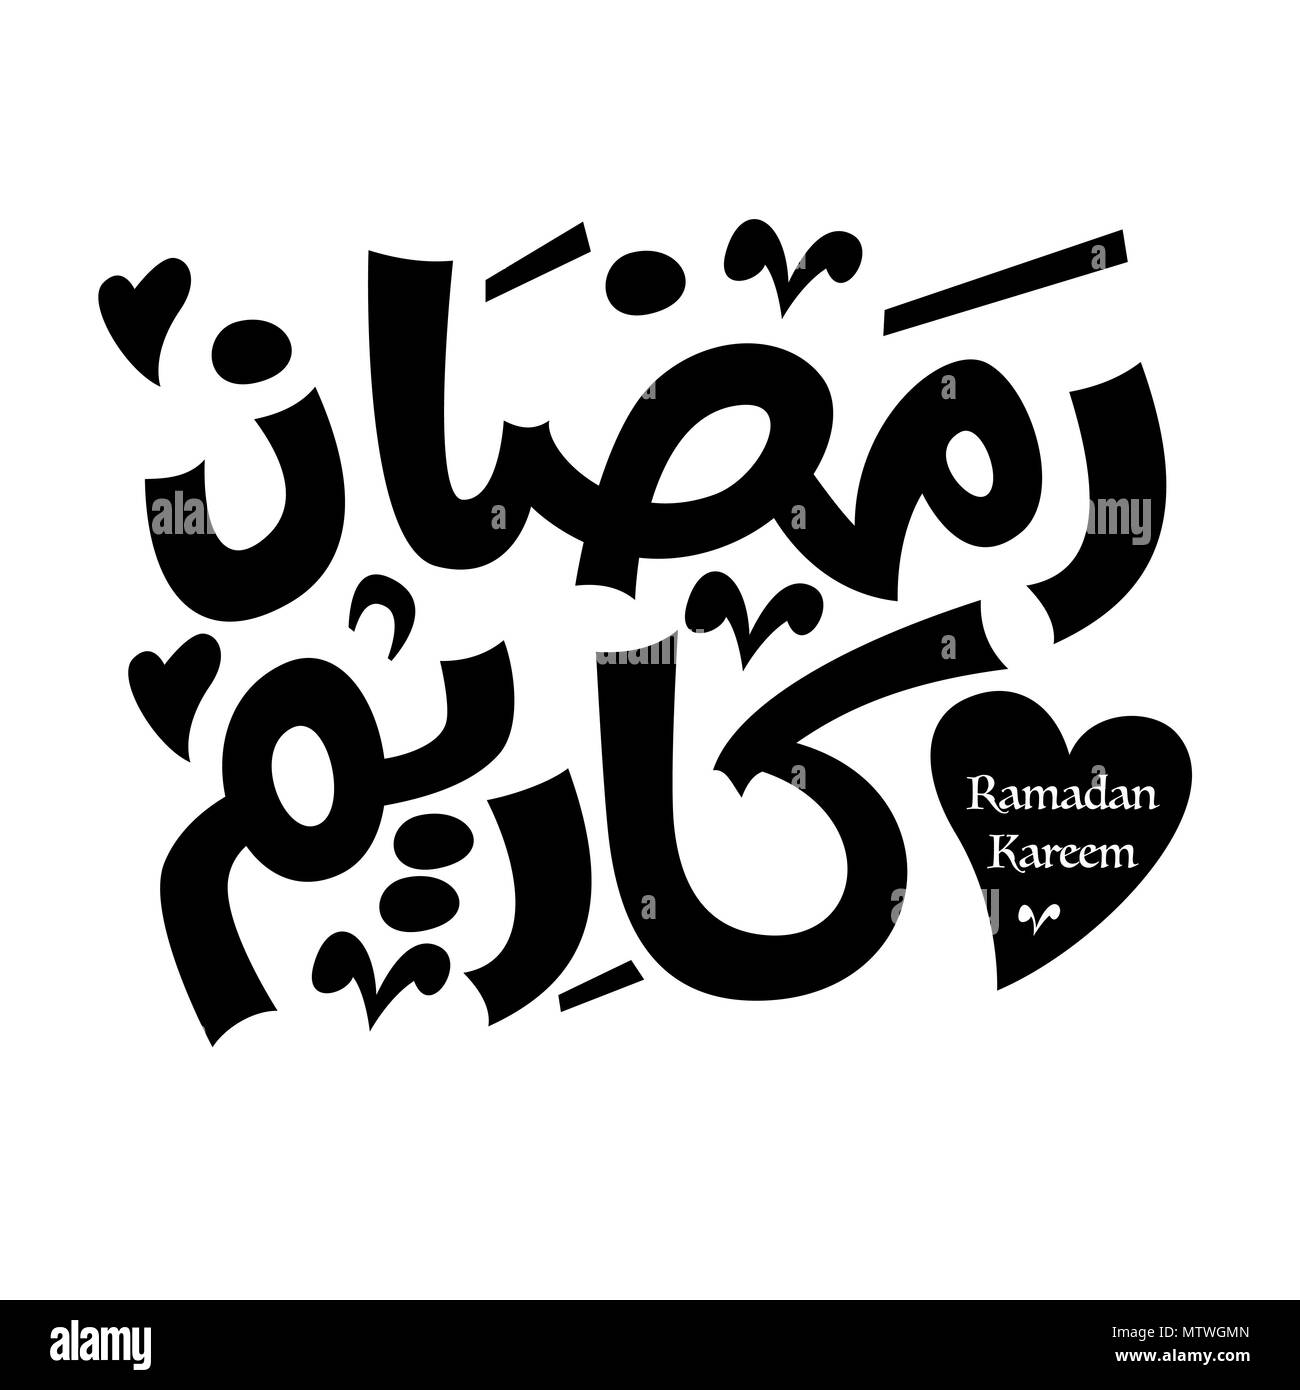 Ramadan Kareem la calligraphie arabe, le Ramadan typographie sur fond blanc. Illustration de Vecteur